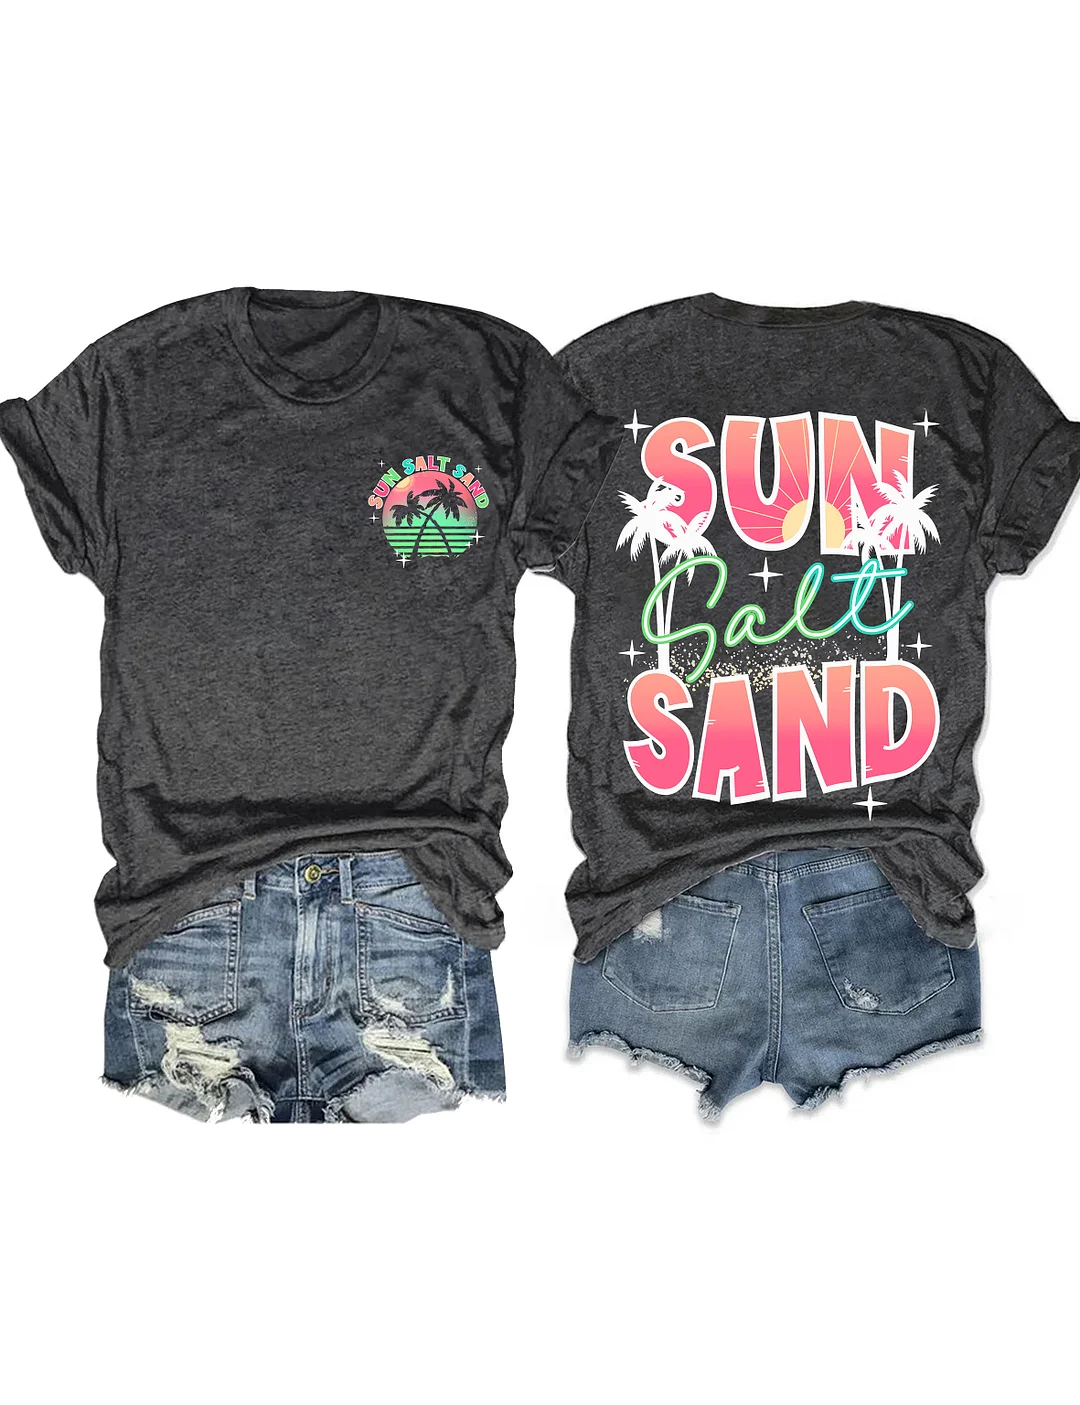 Sun salt sand T-shirt